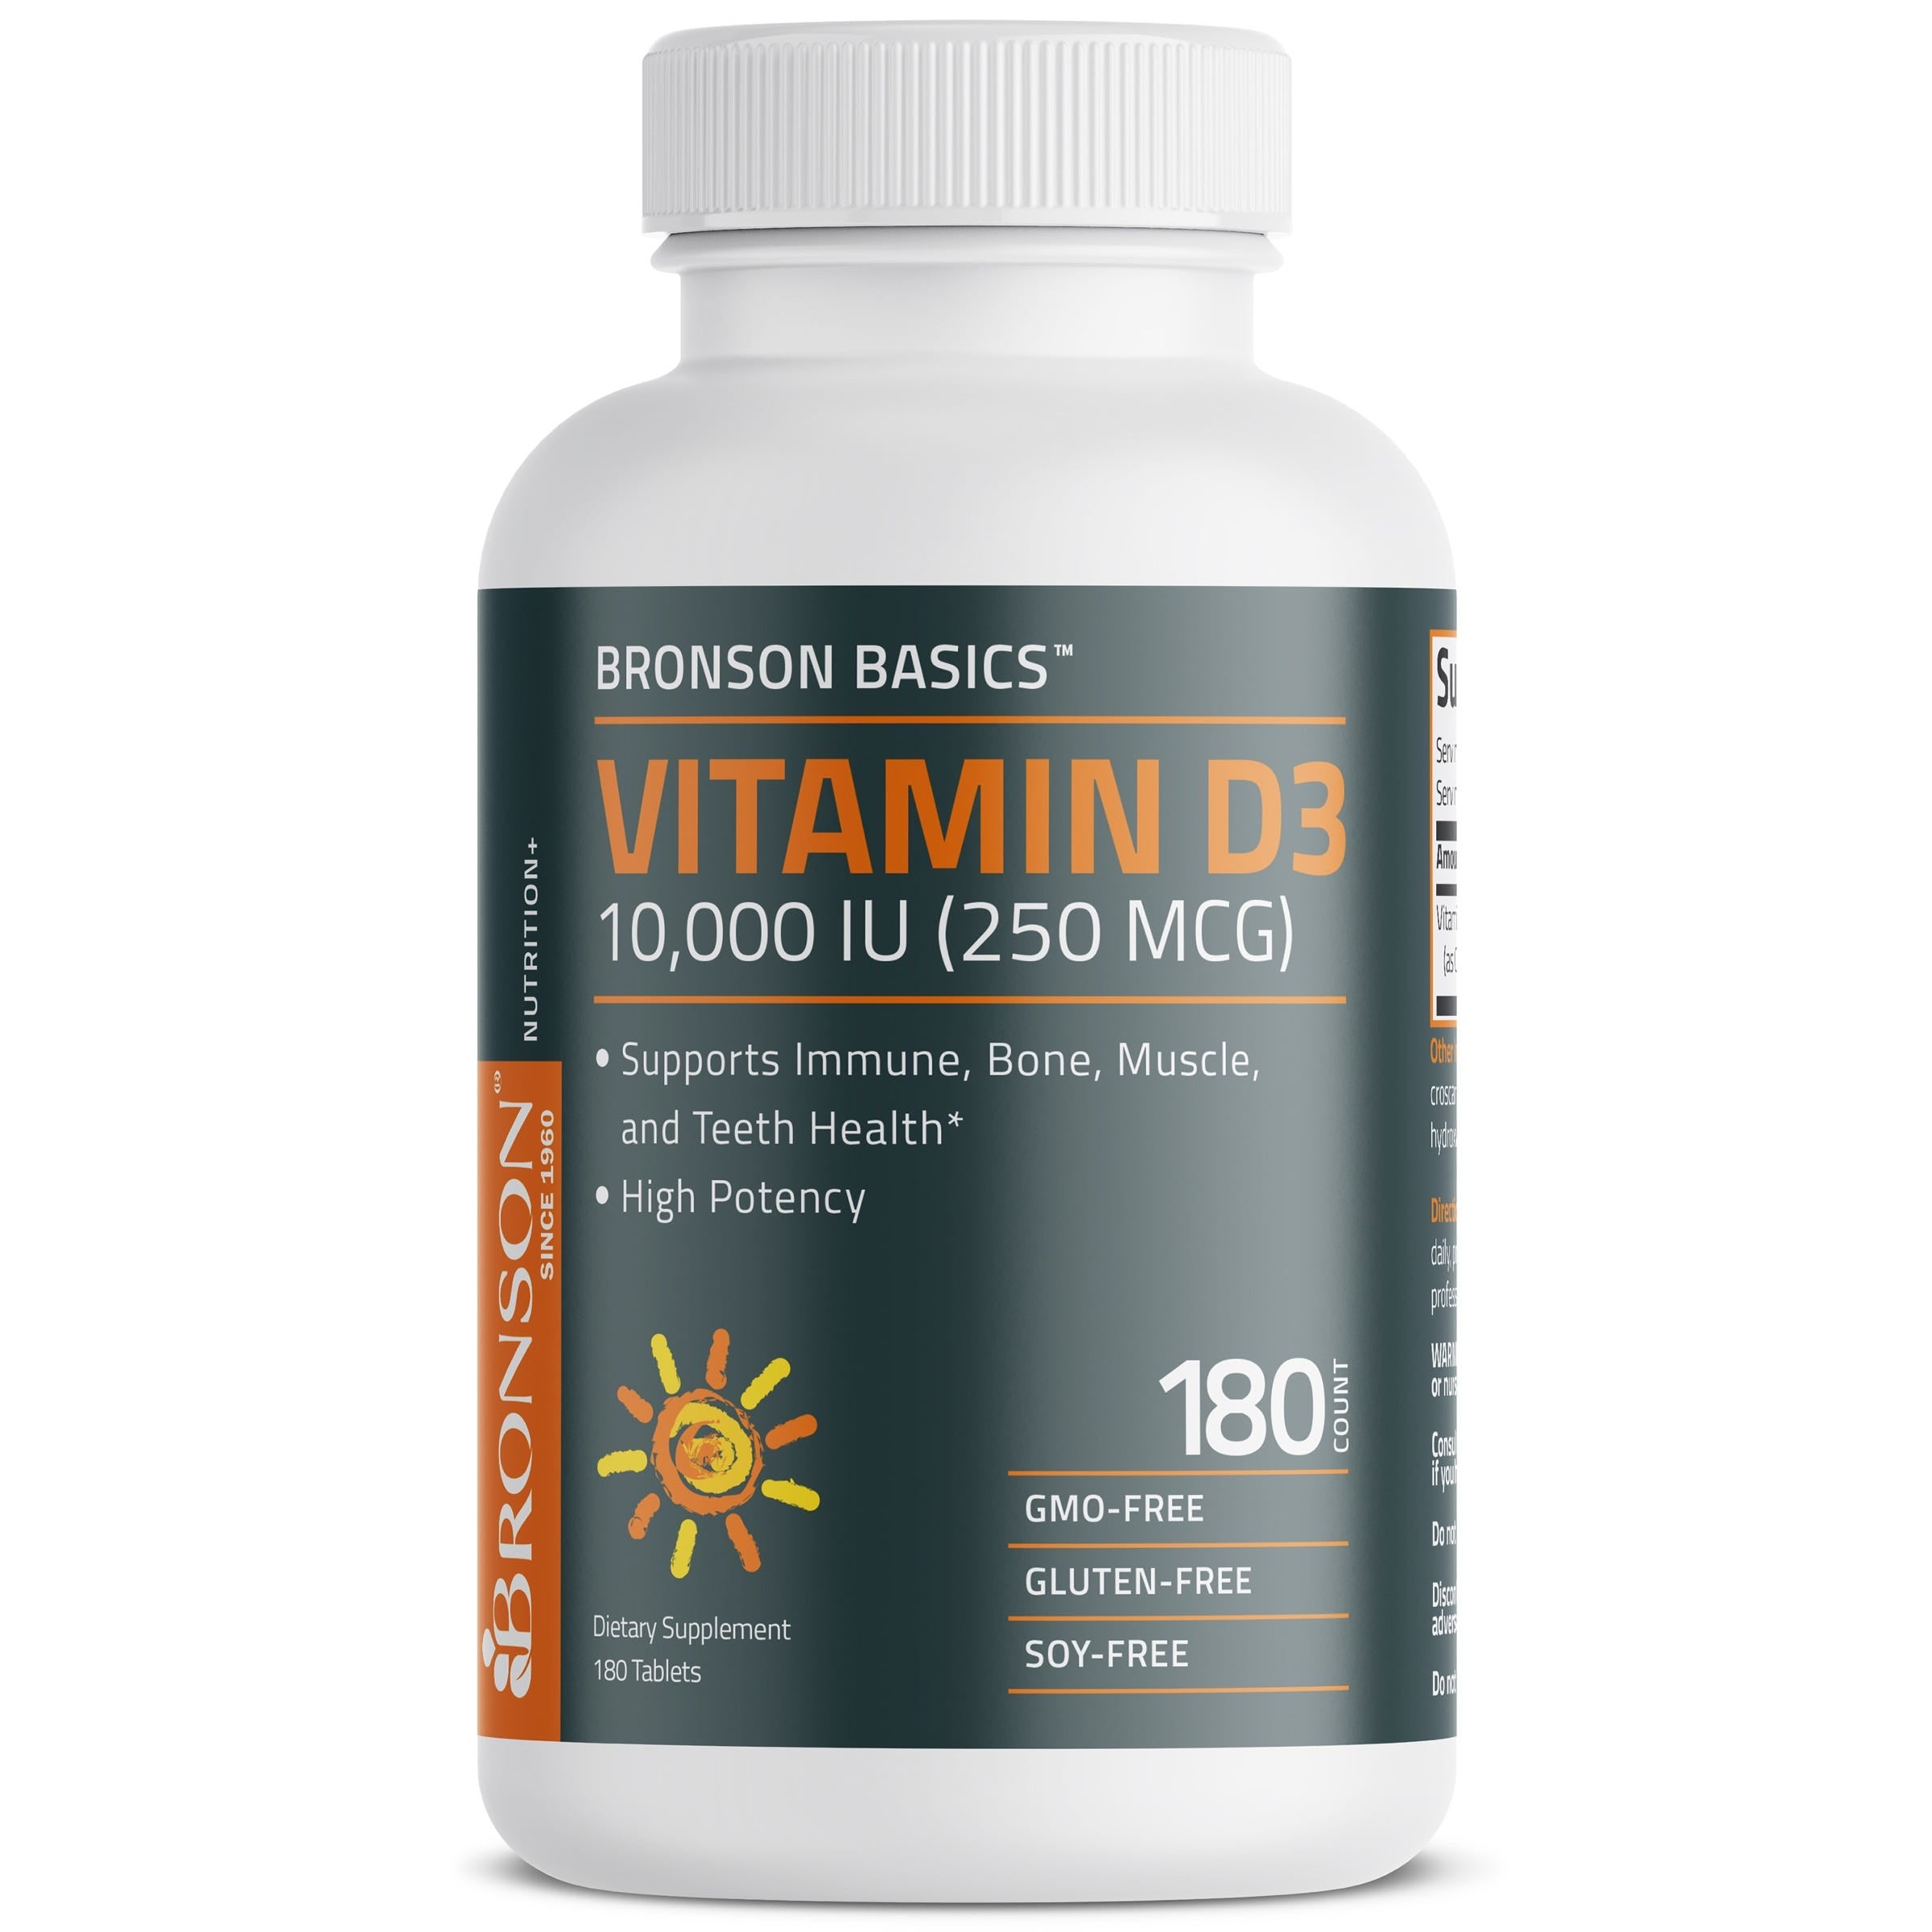 Vitamin D3 10,000 IU (250 MCG) view 3 of 6